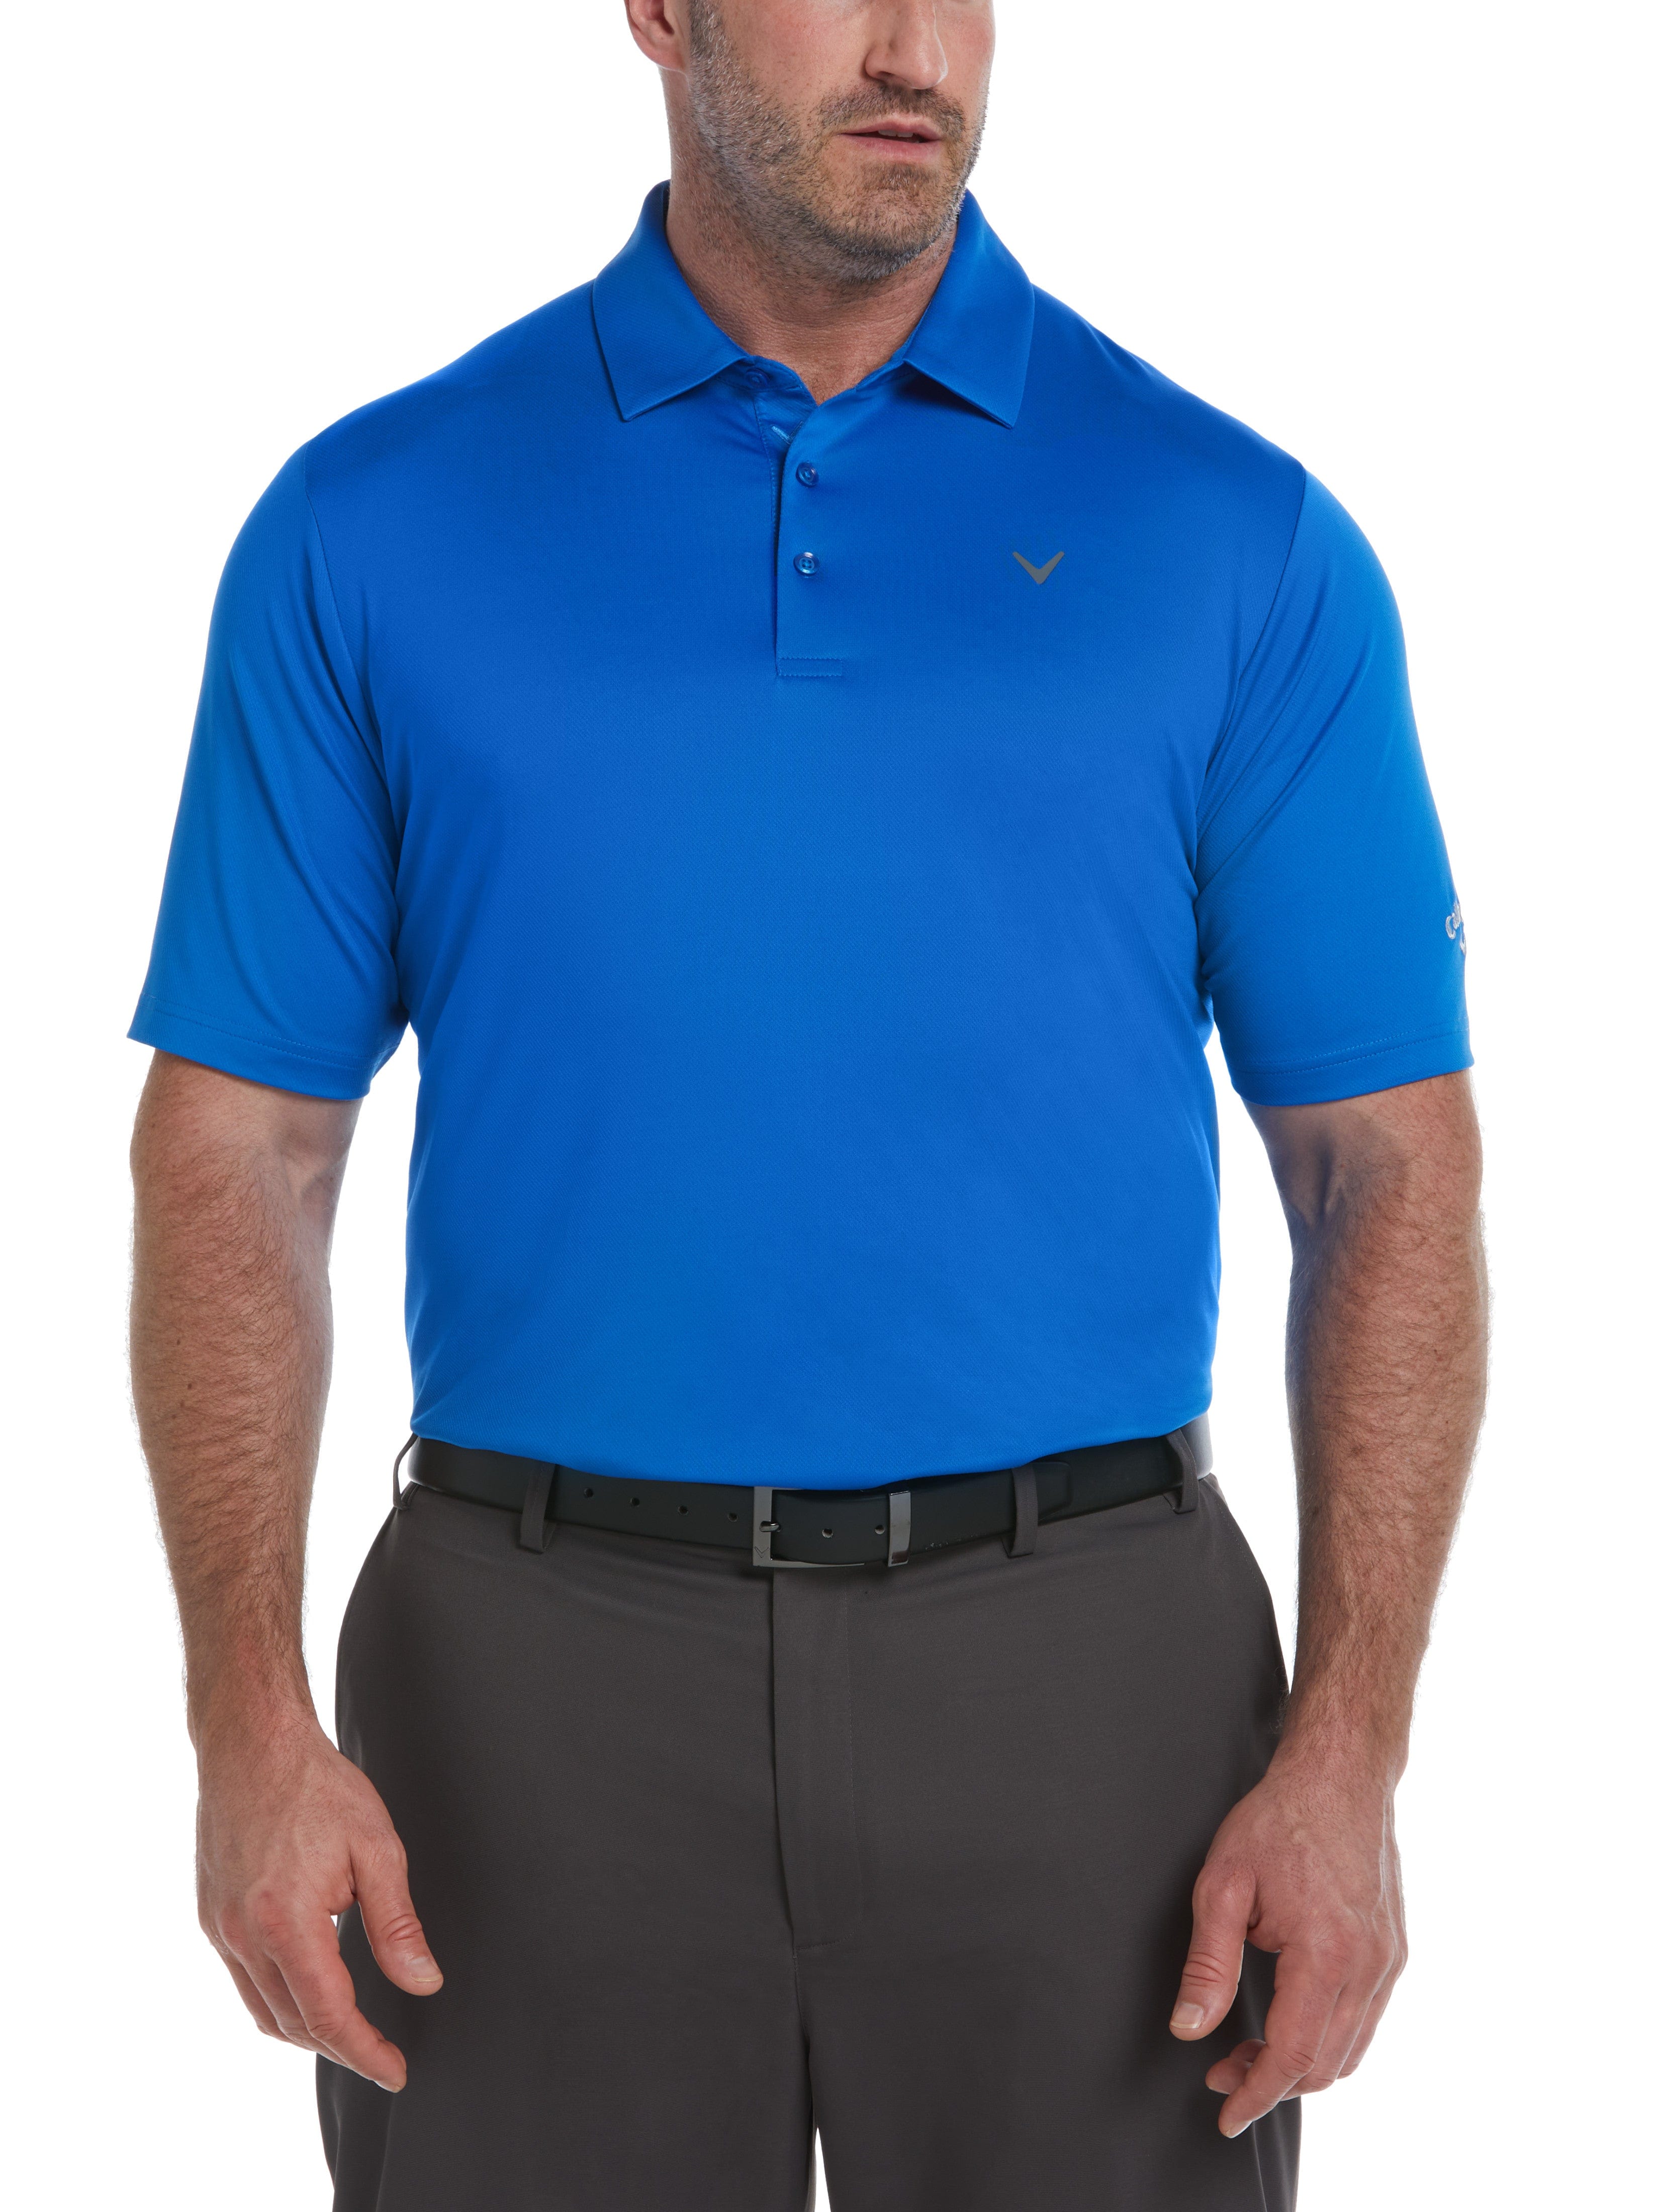 Callaway Apparel Mens Big & Tall Solid Swing Tech Golf Polo Shirt, Size 3XLT, Magnetic Blue, Polyester/Elastane | Golf Apparel Shop